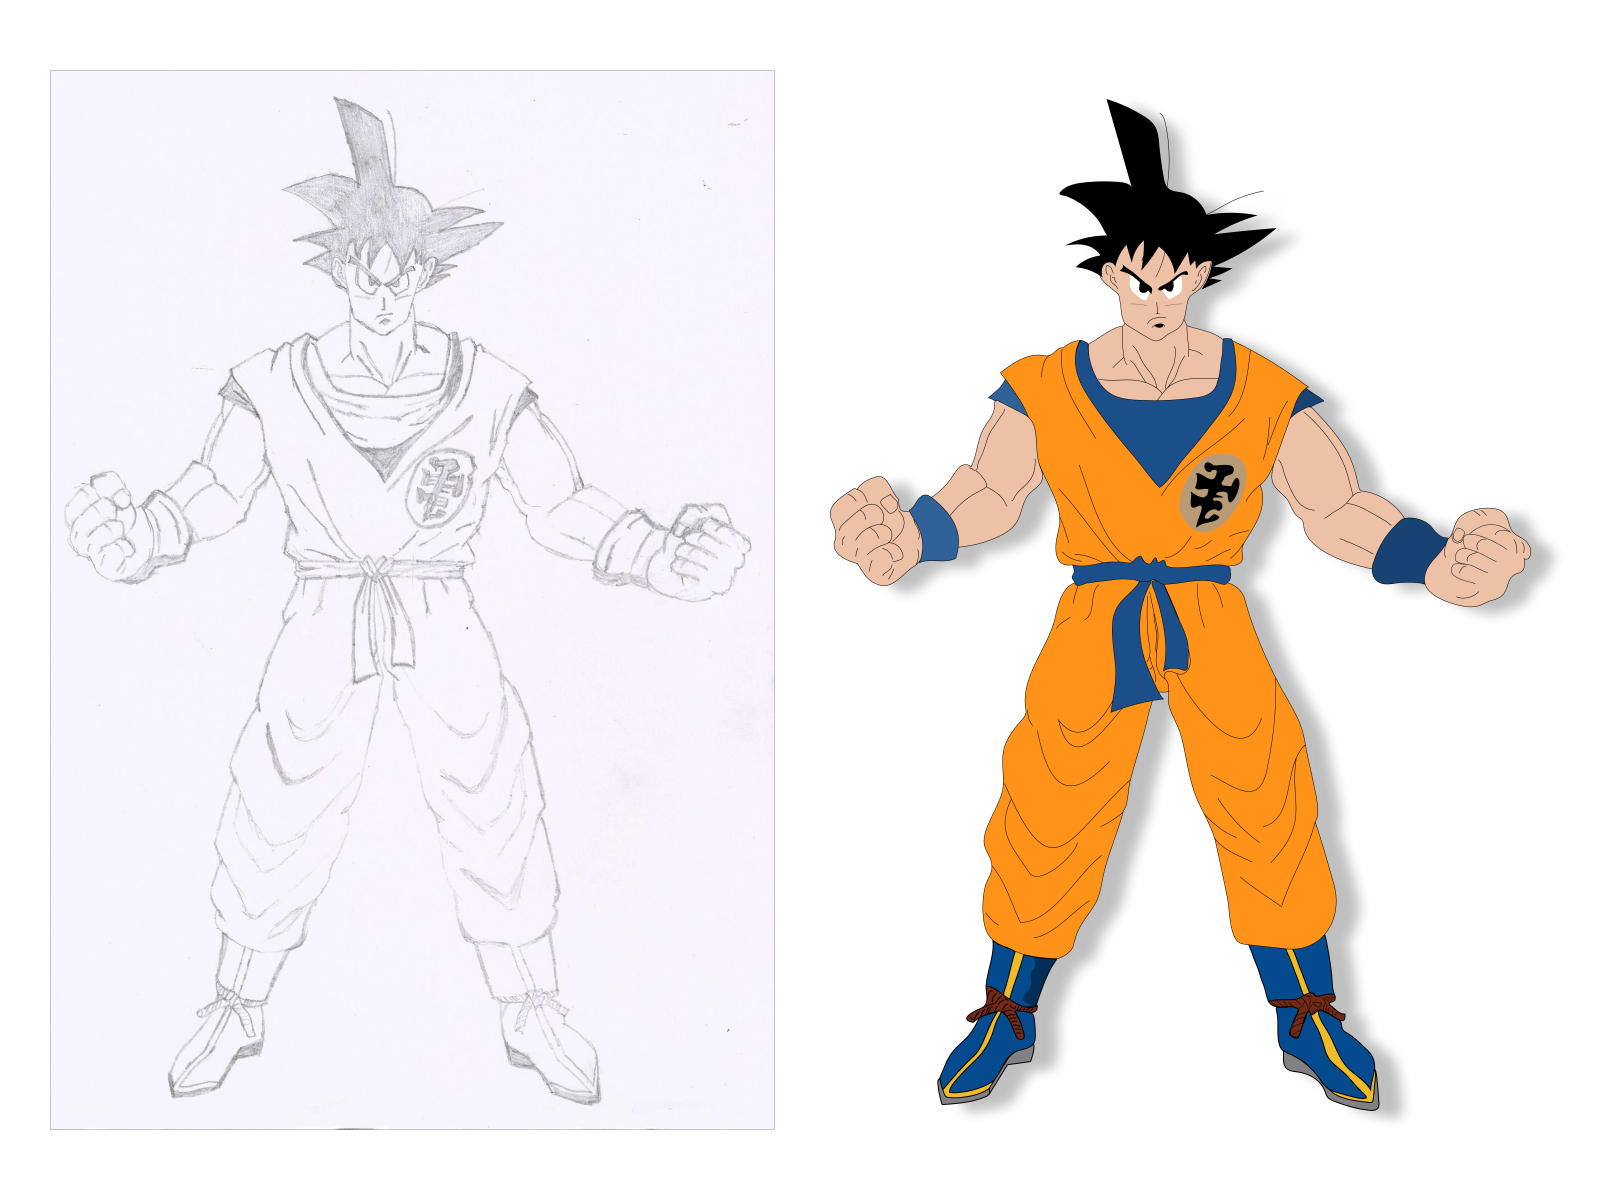 Goku | Dragon Ball Z | Cartoon Character by Saurabh kumar on Dribbble